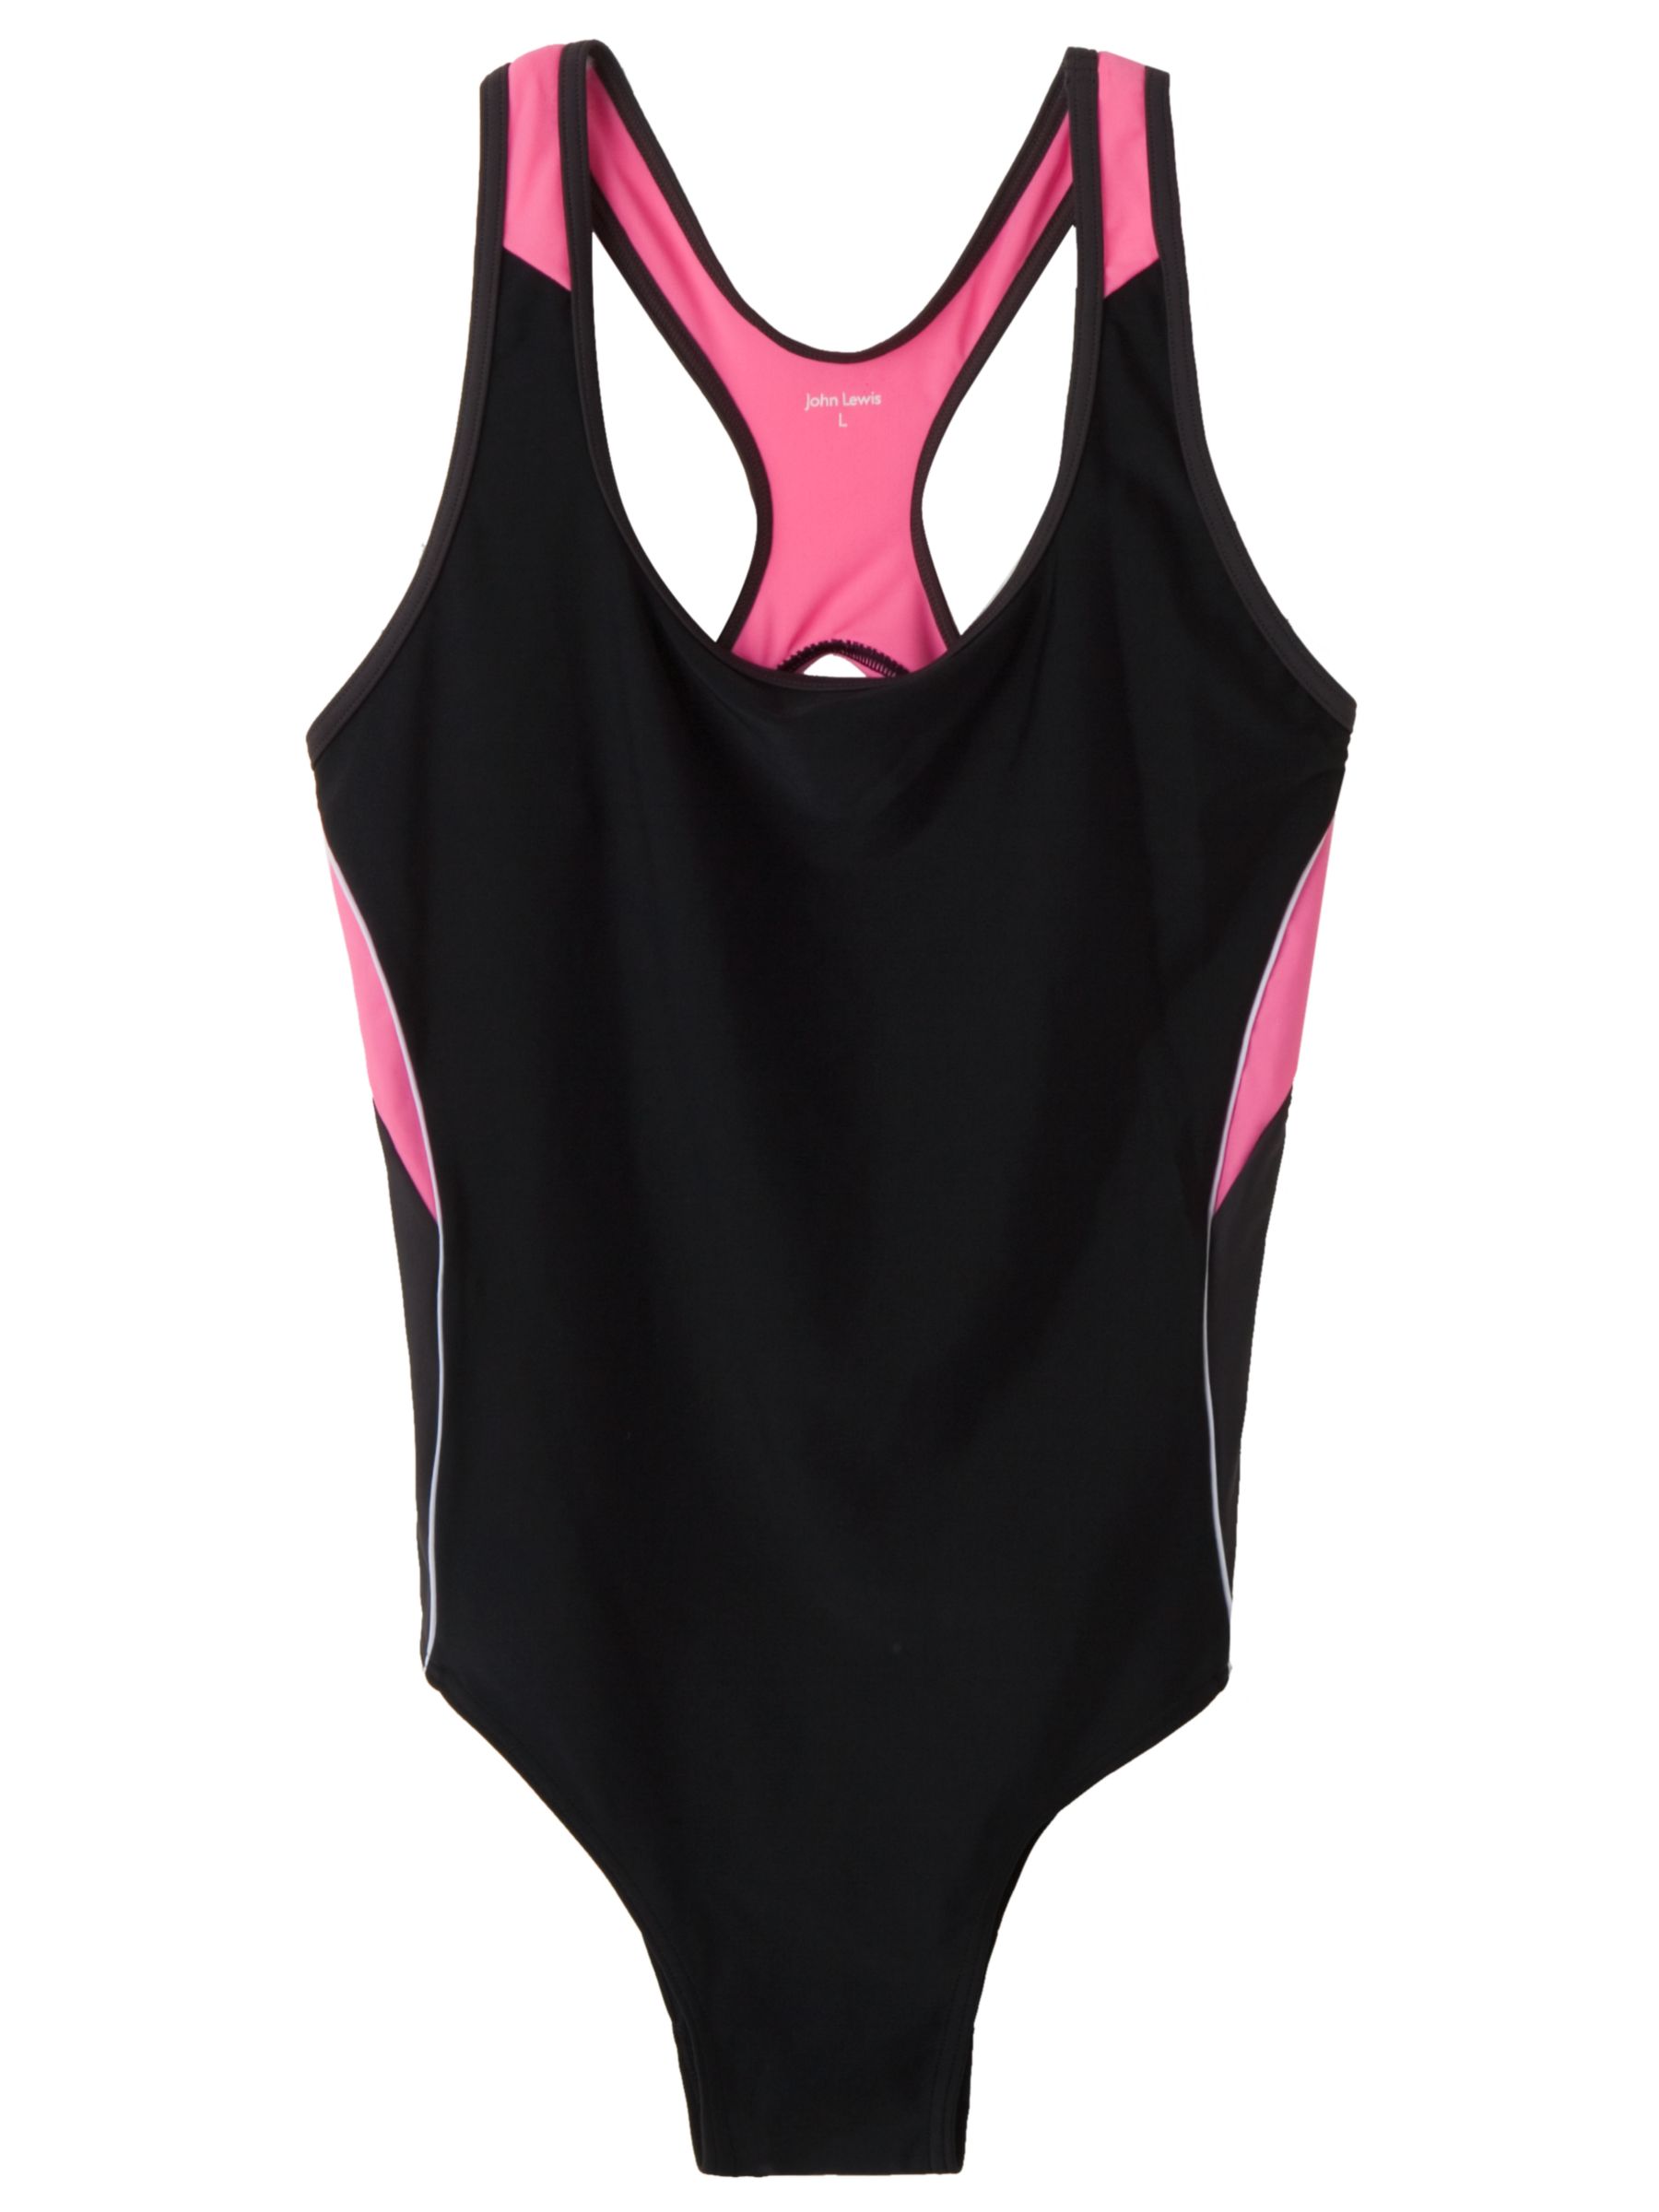 John Lewis Racer Back Swimsuit, Black/Pink, M